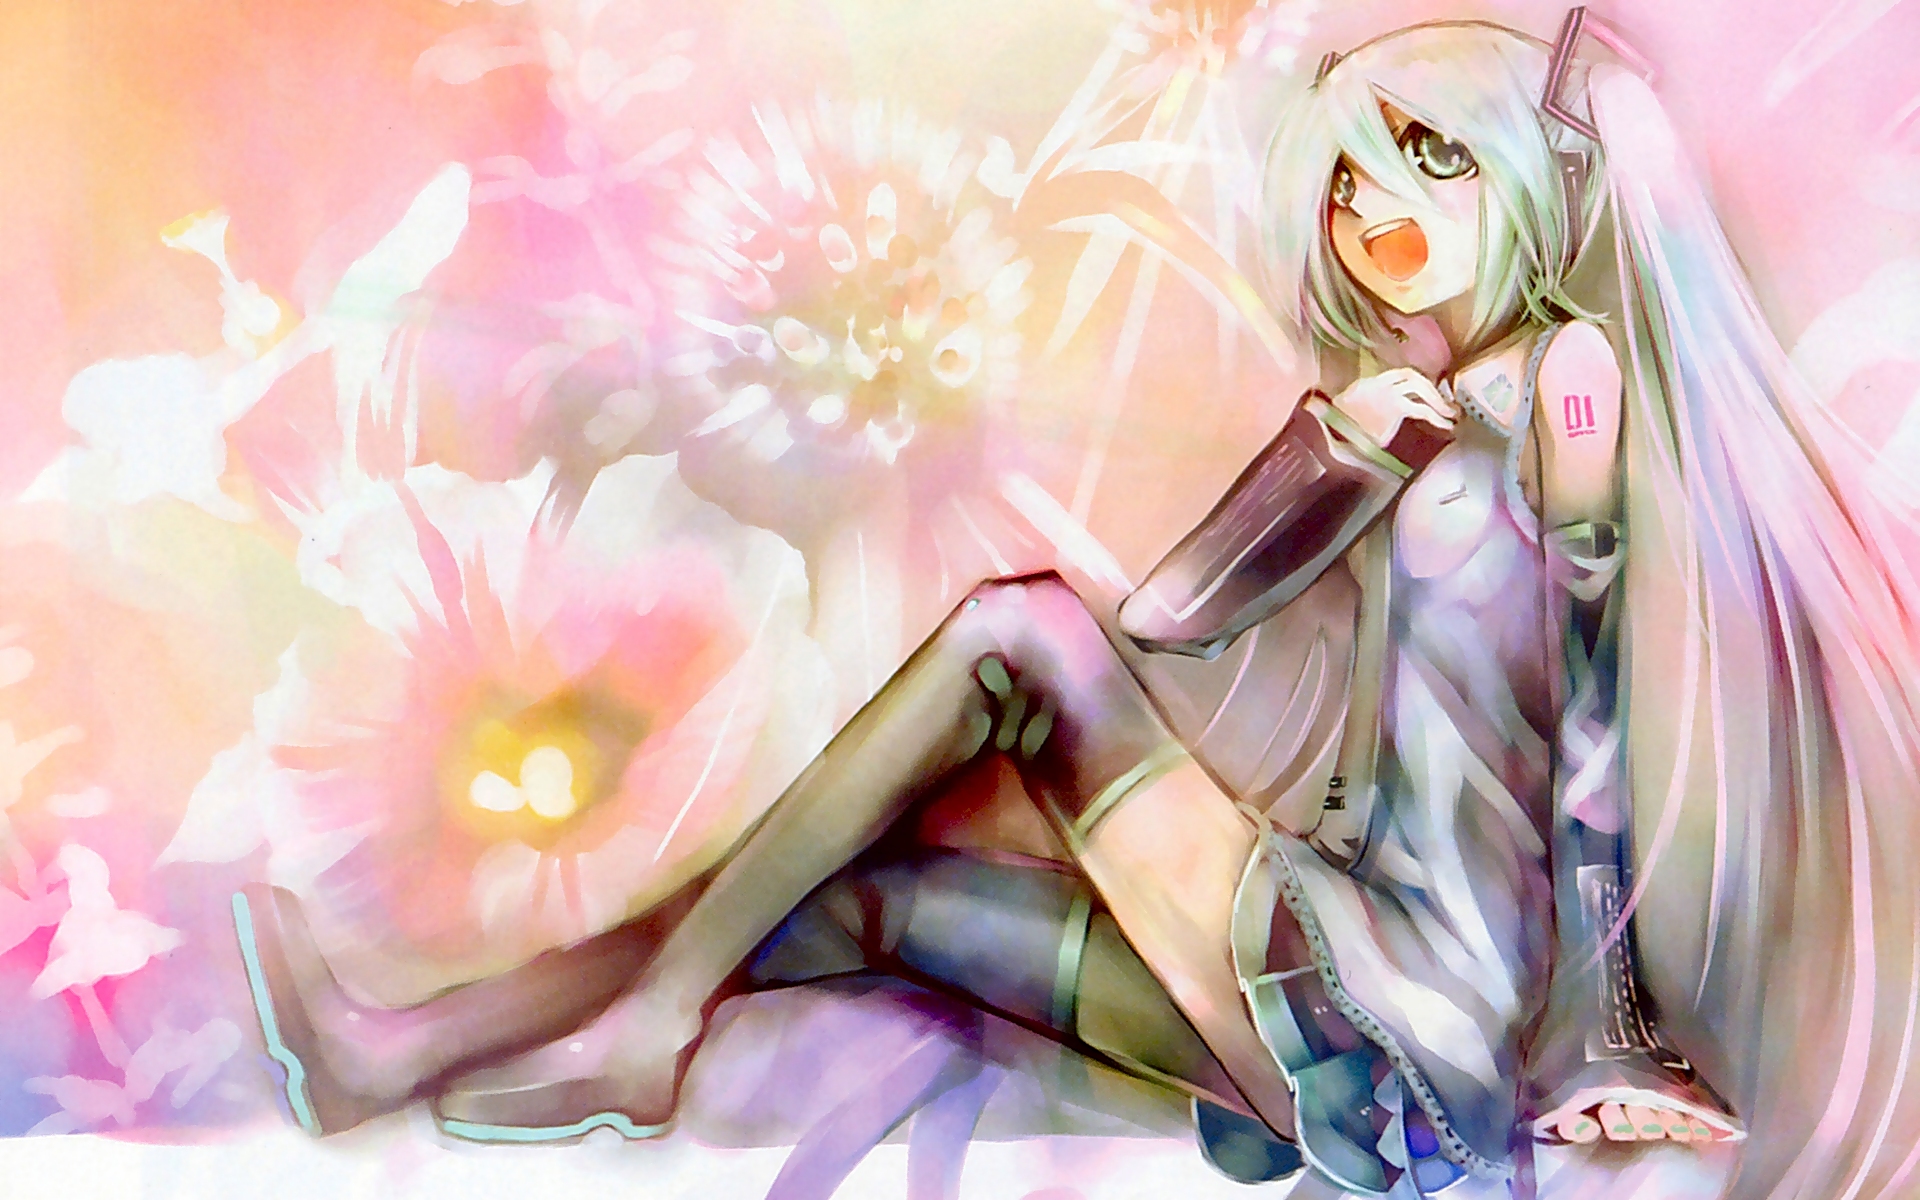 Vocaloid, Hatsune Miku, detached sleeves, bare shoulders - desktop wallpaper